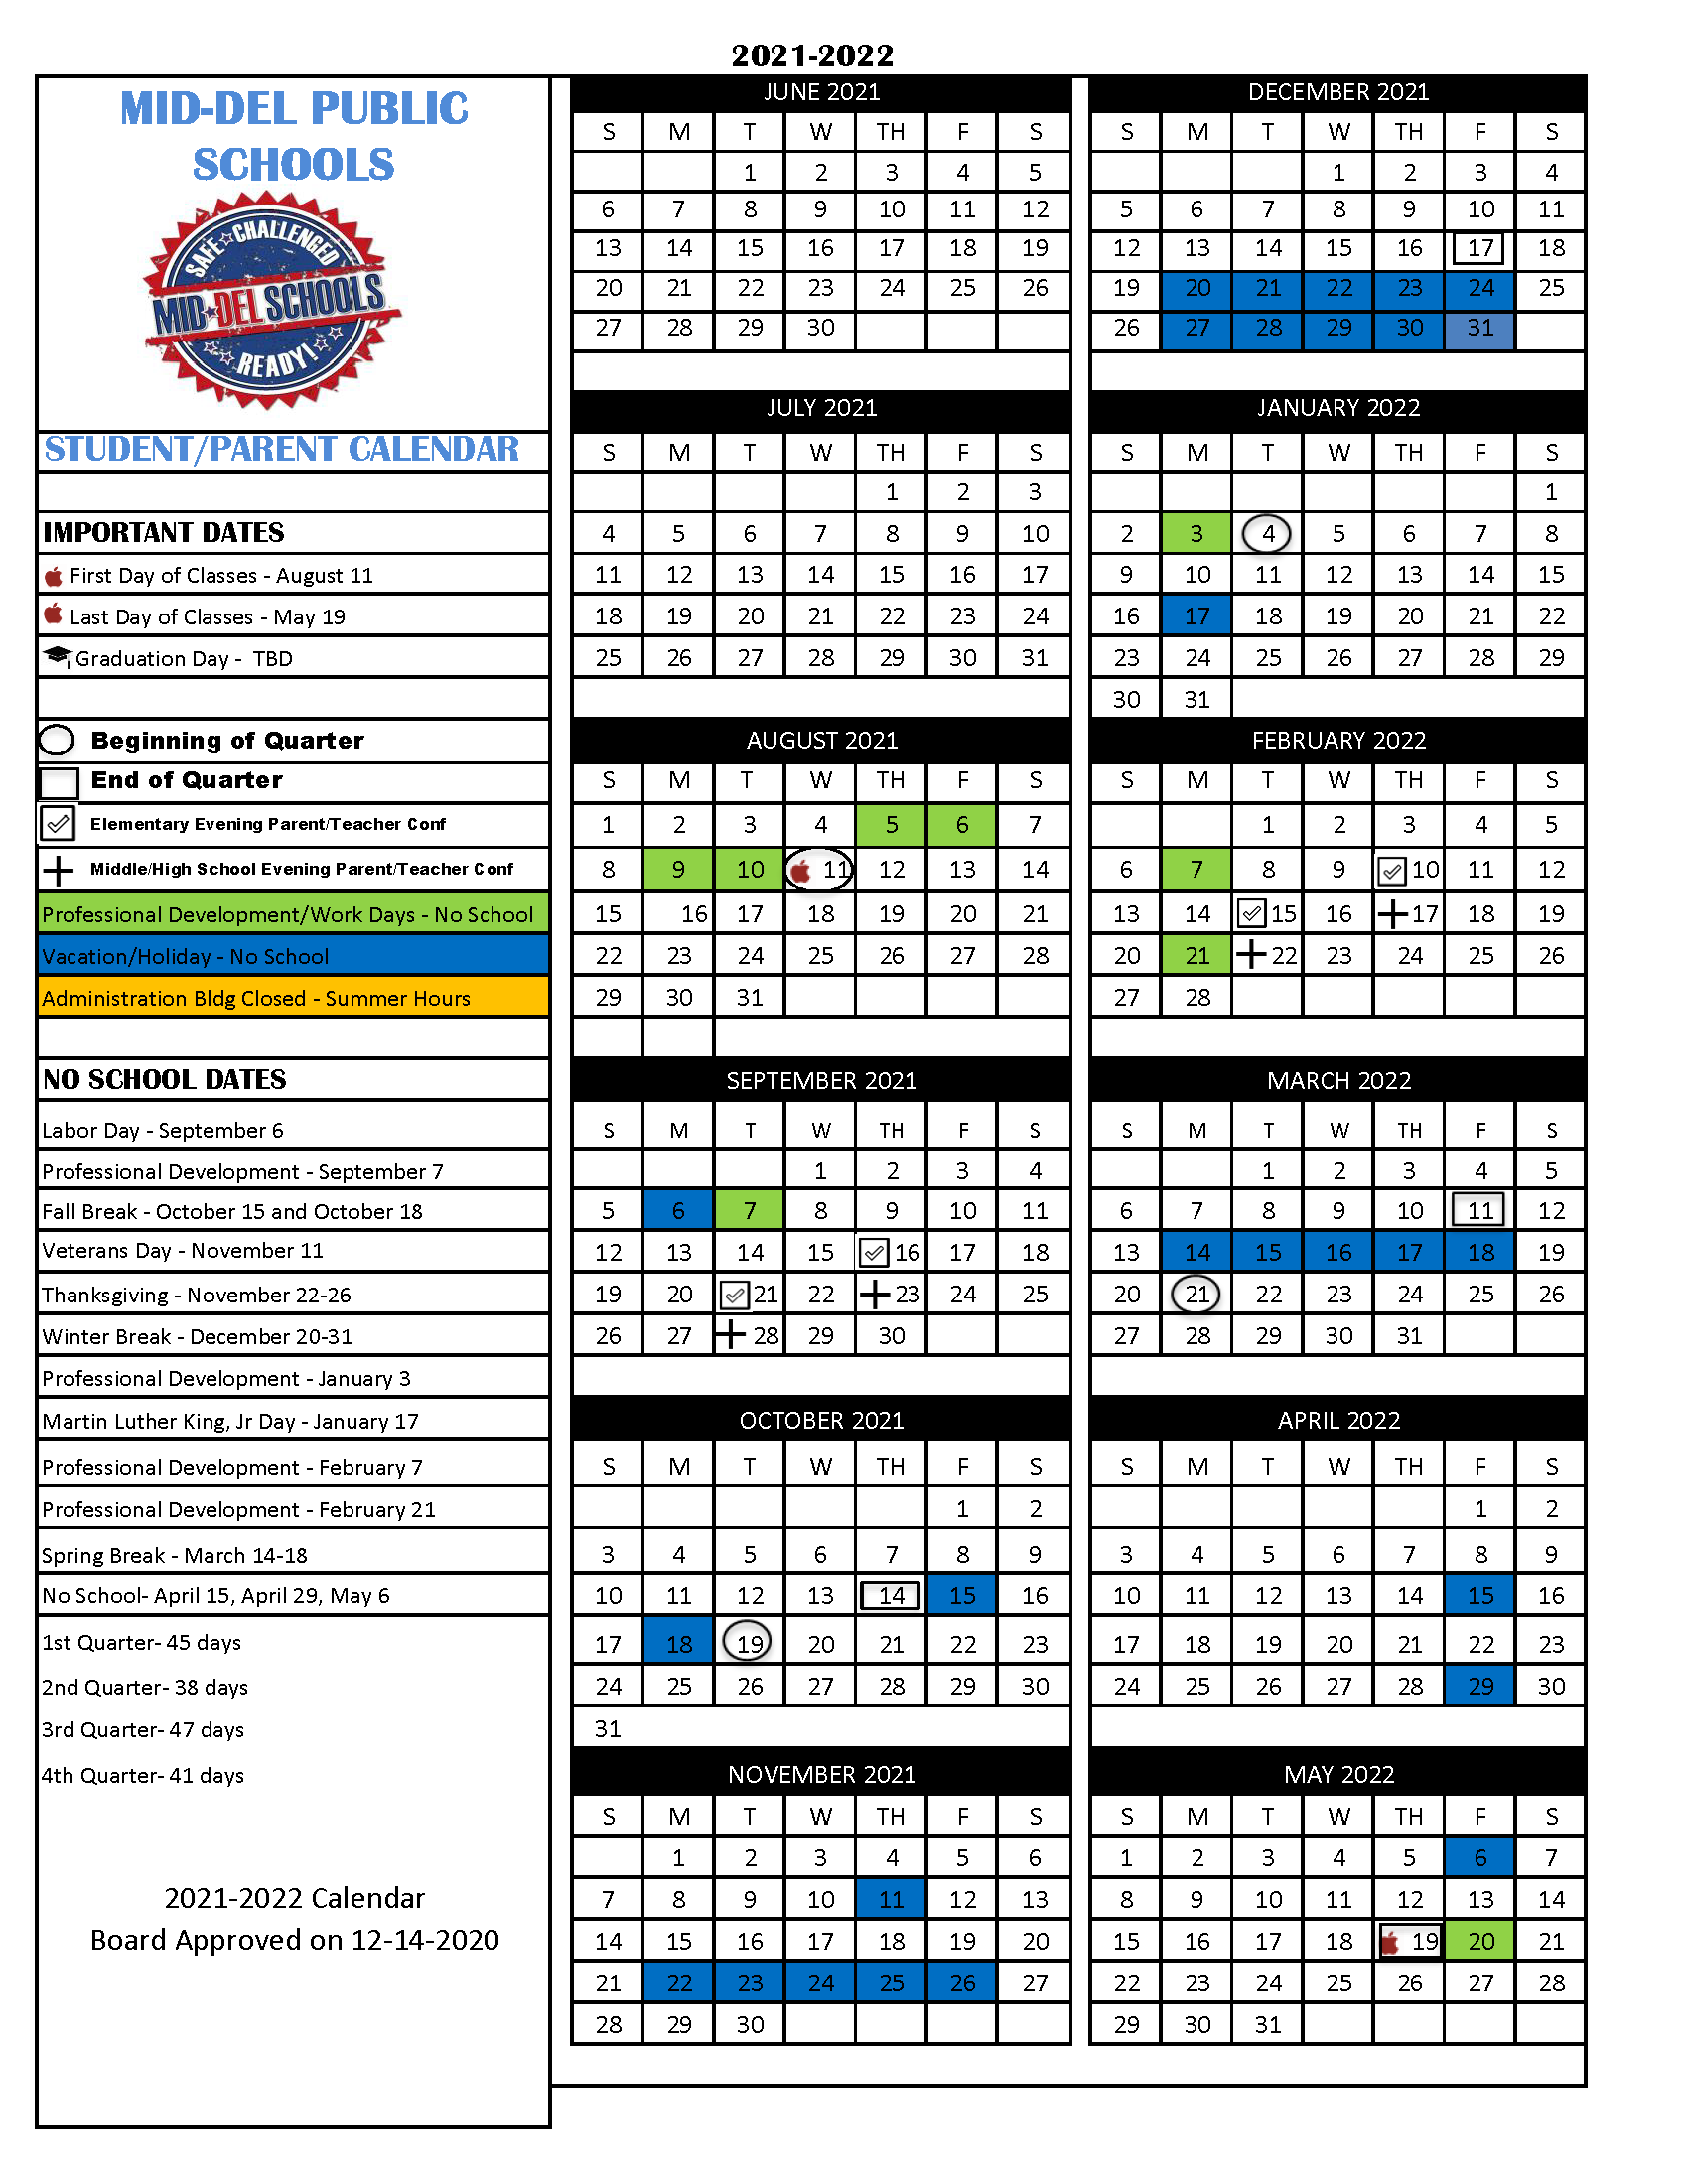 Southeast Community College Calendar 2022 2021-2022 School Calendar | Mid-Del School District